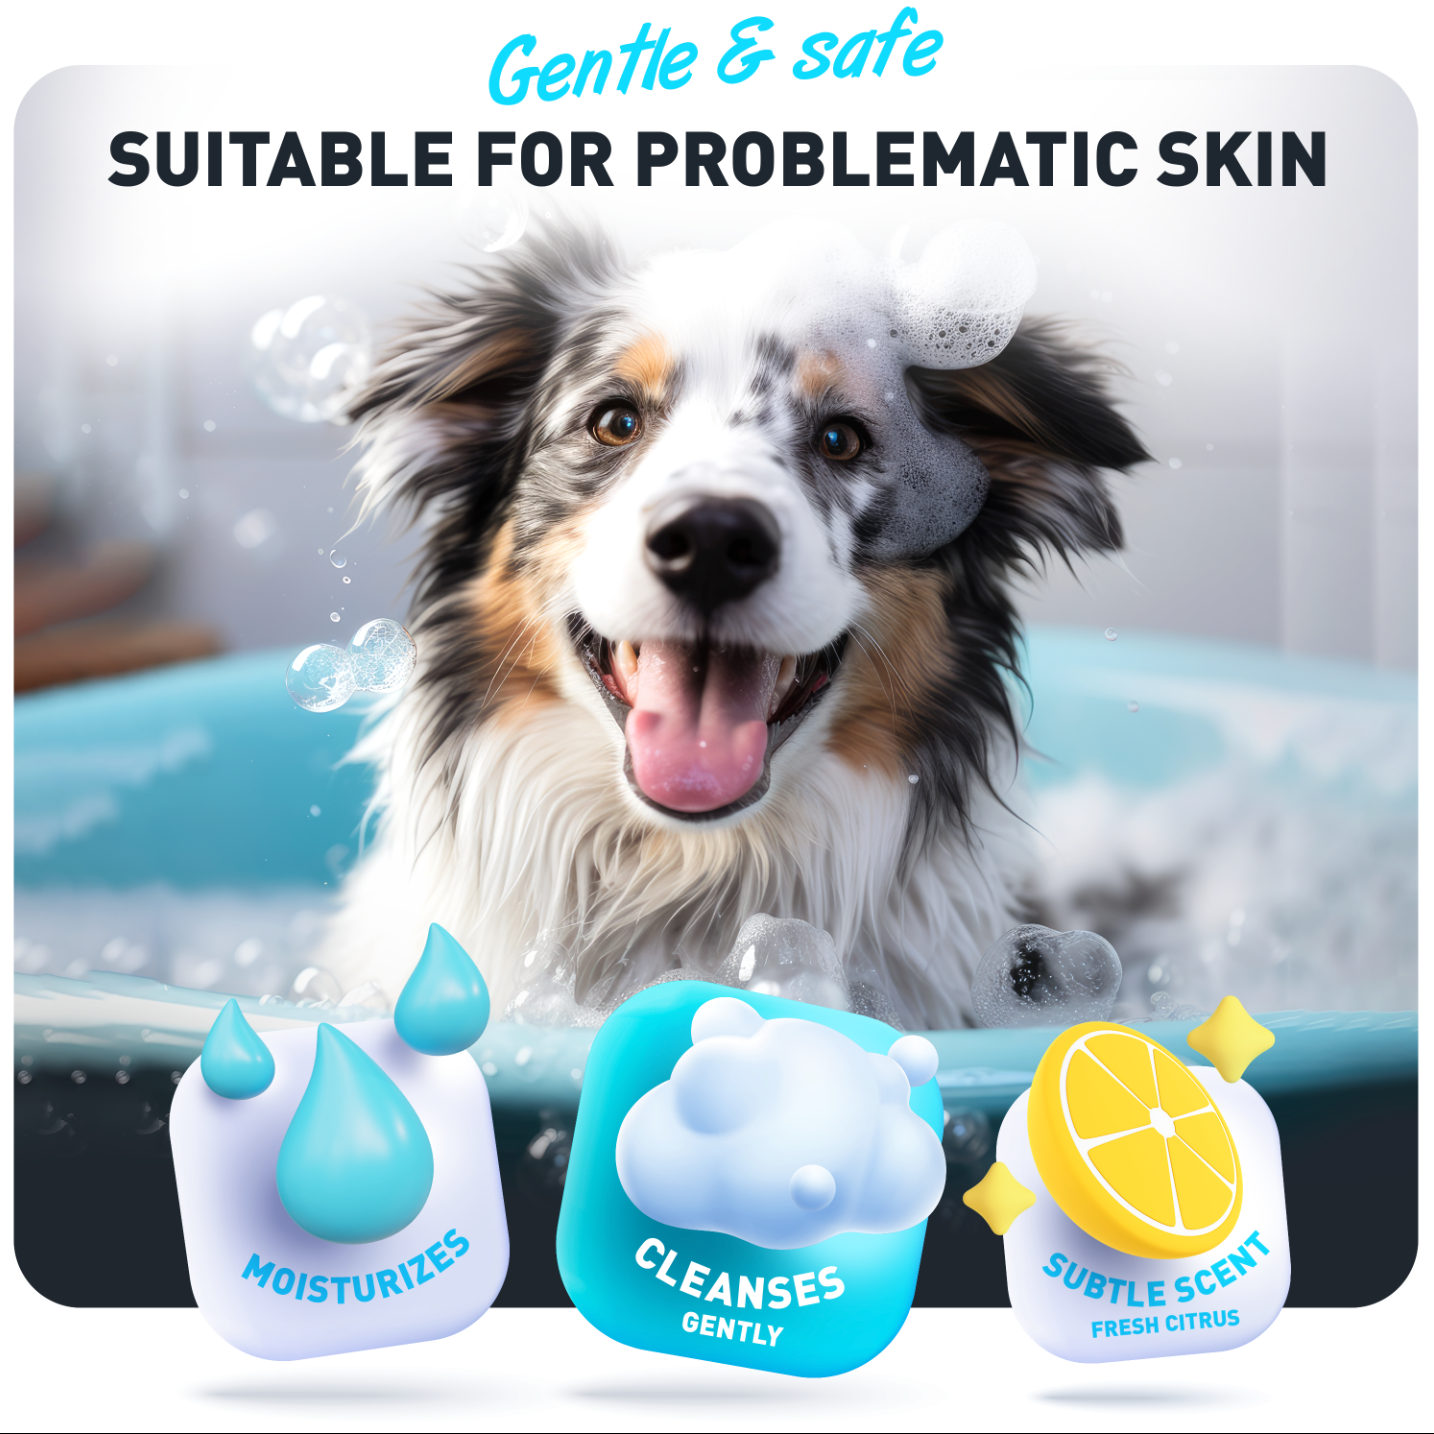 2X Super Soaper Dog Shampoo Refill (150ml)